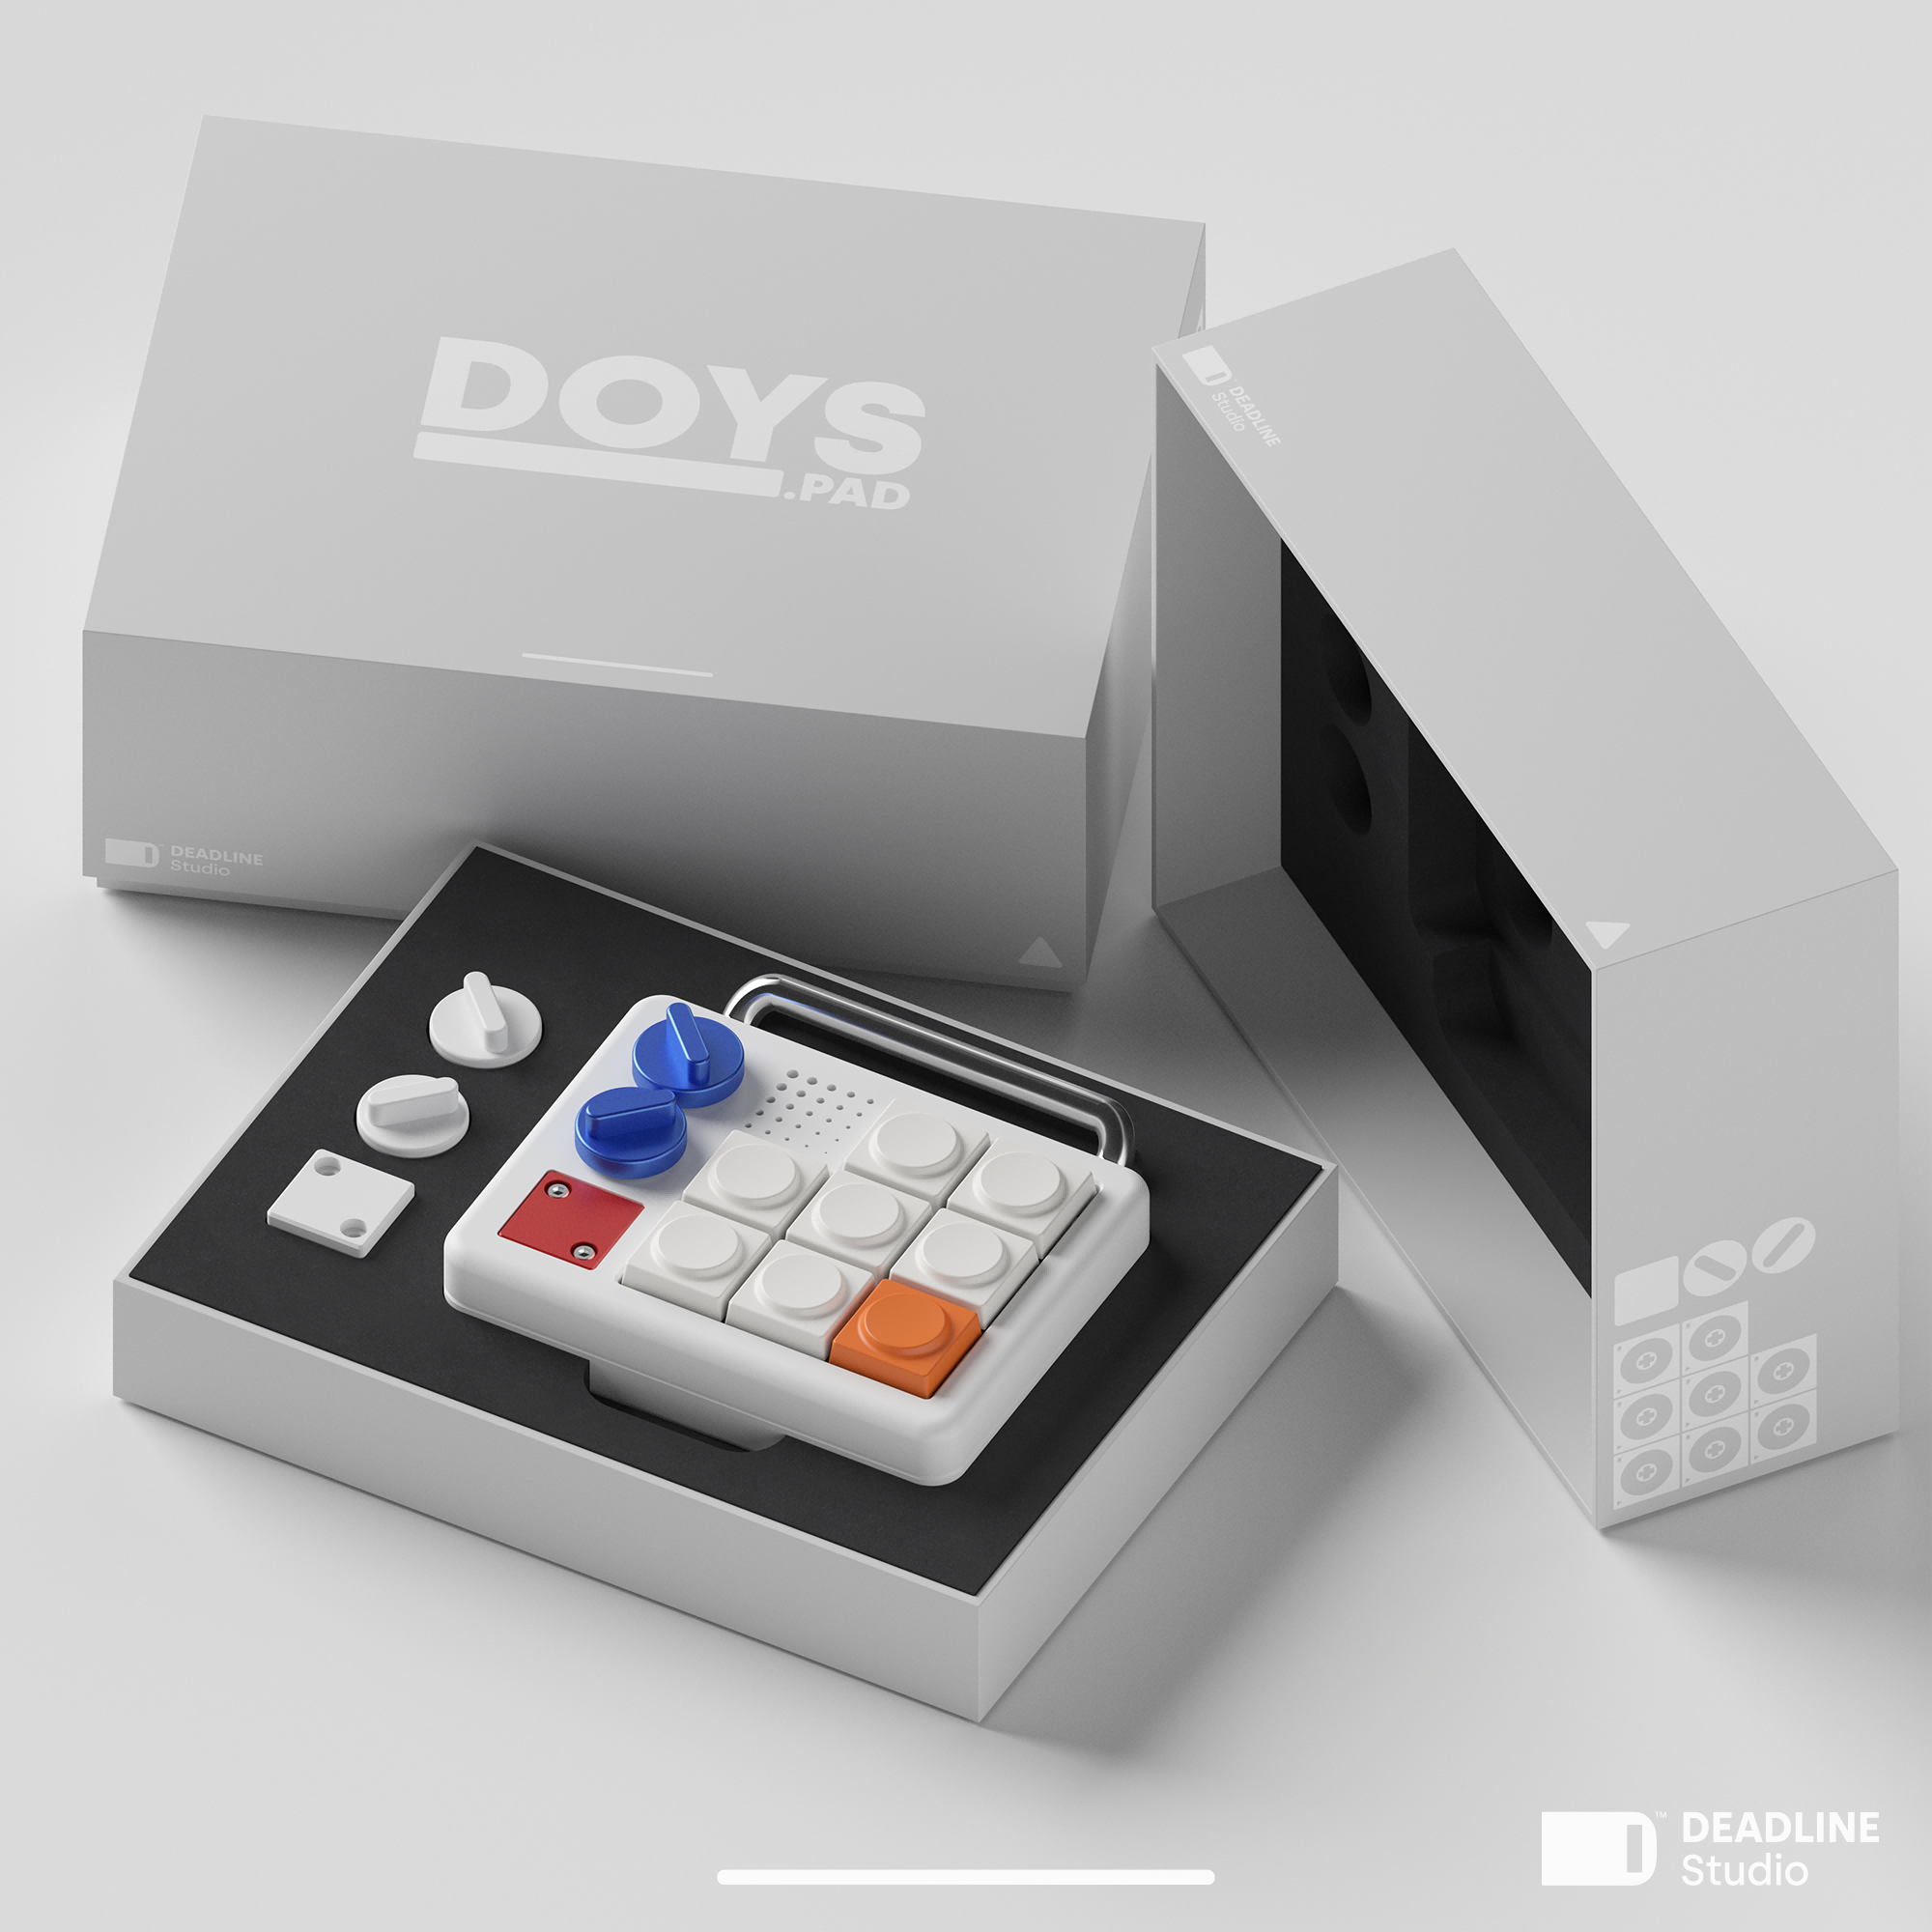 DOYS PAD - Group-Buy